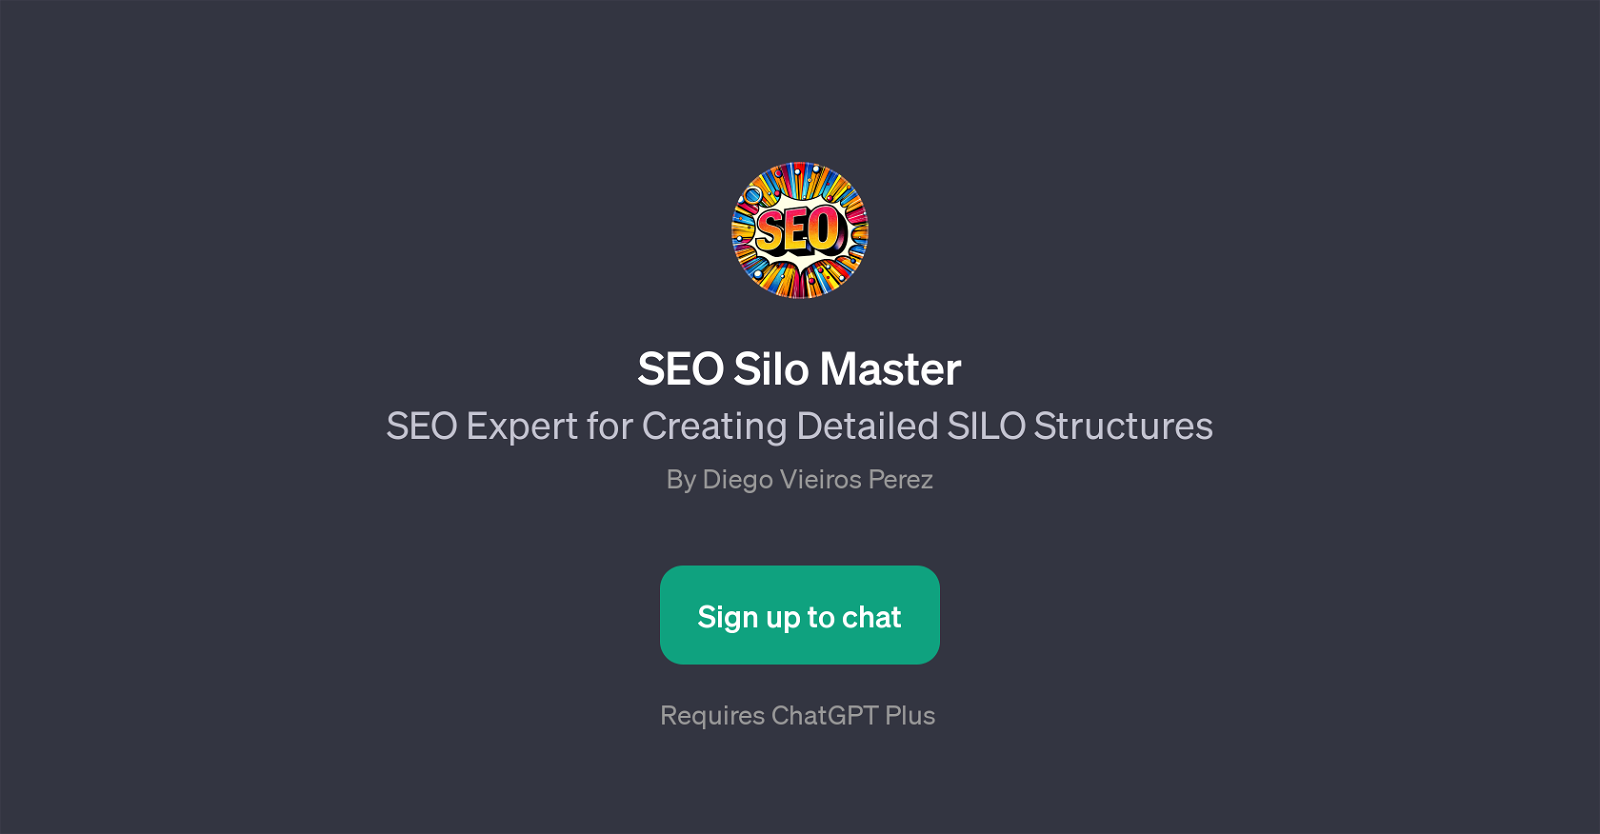 SEO Silo Master website